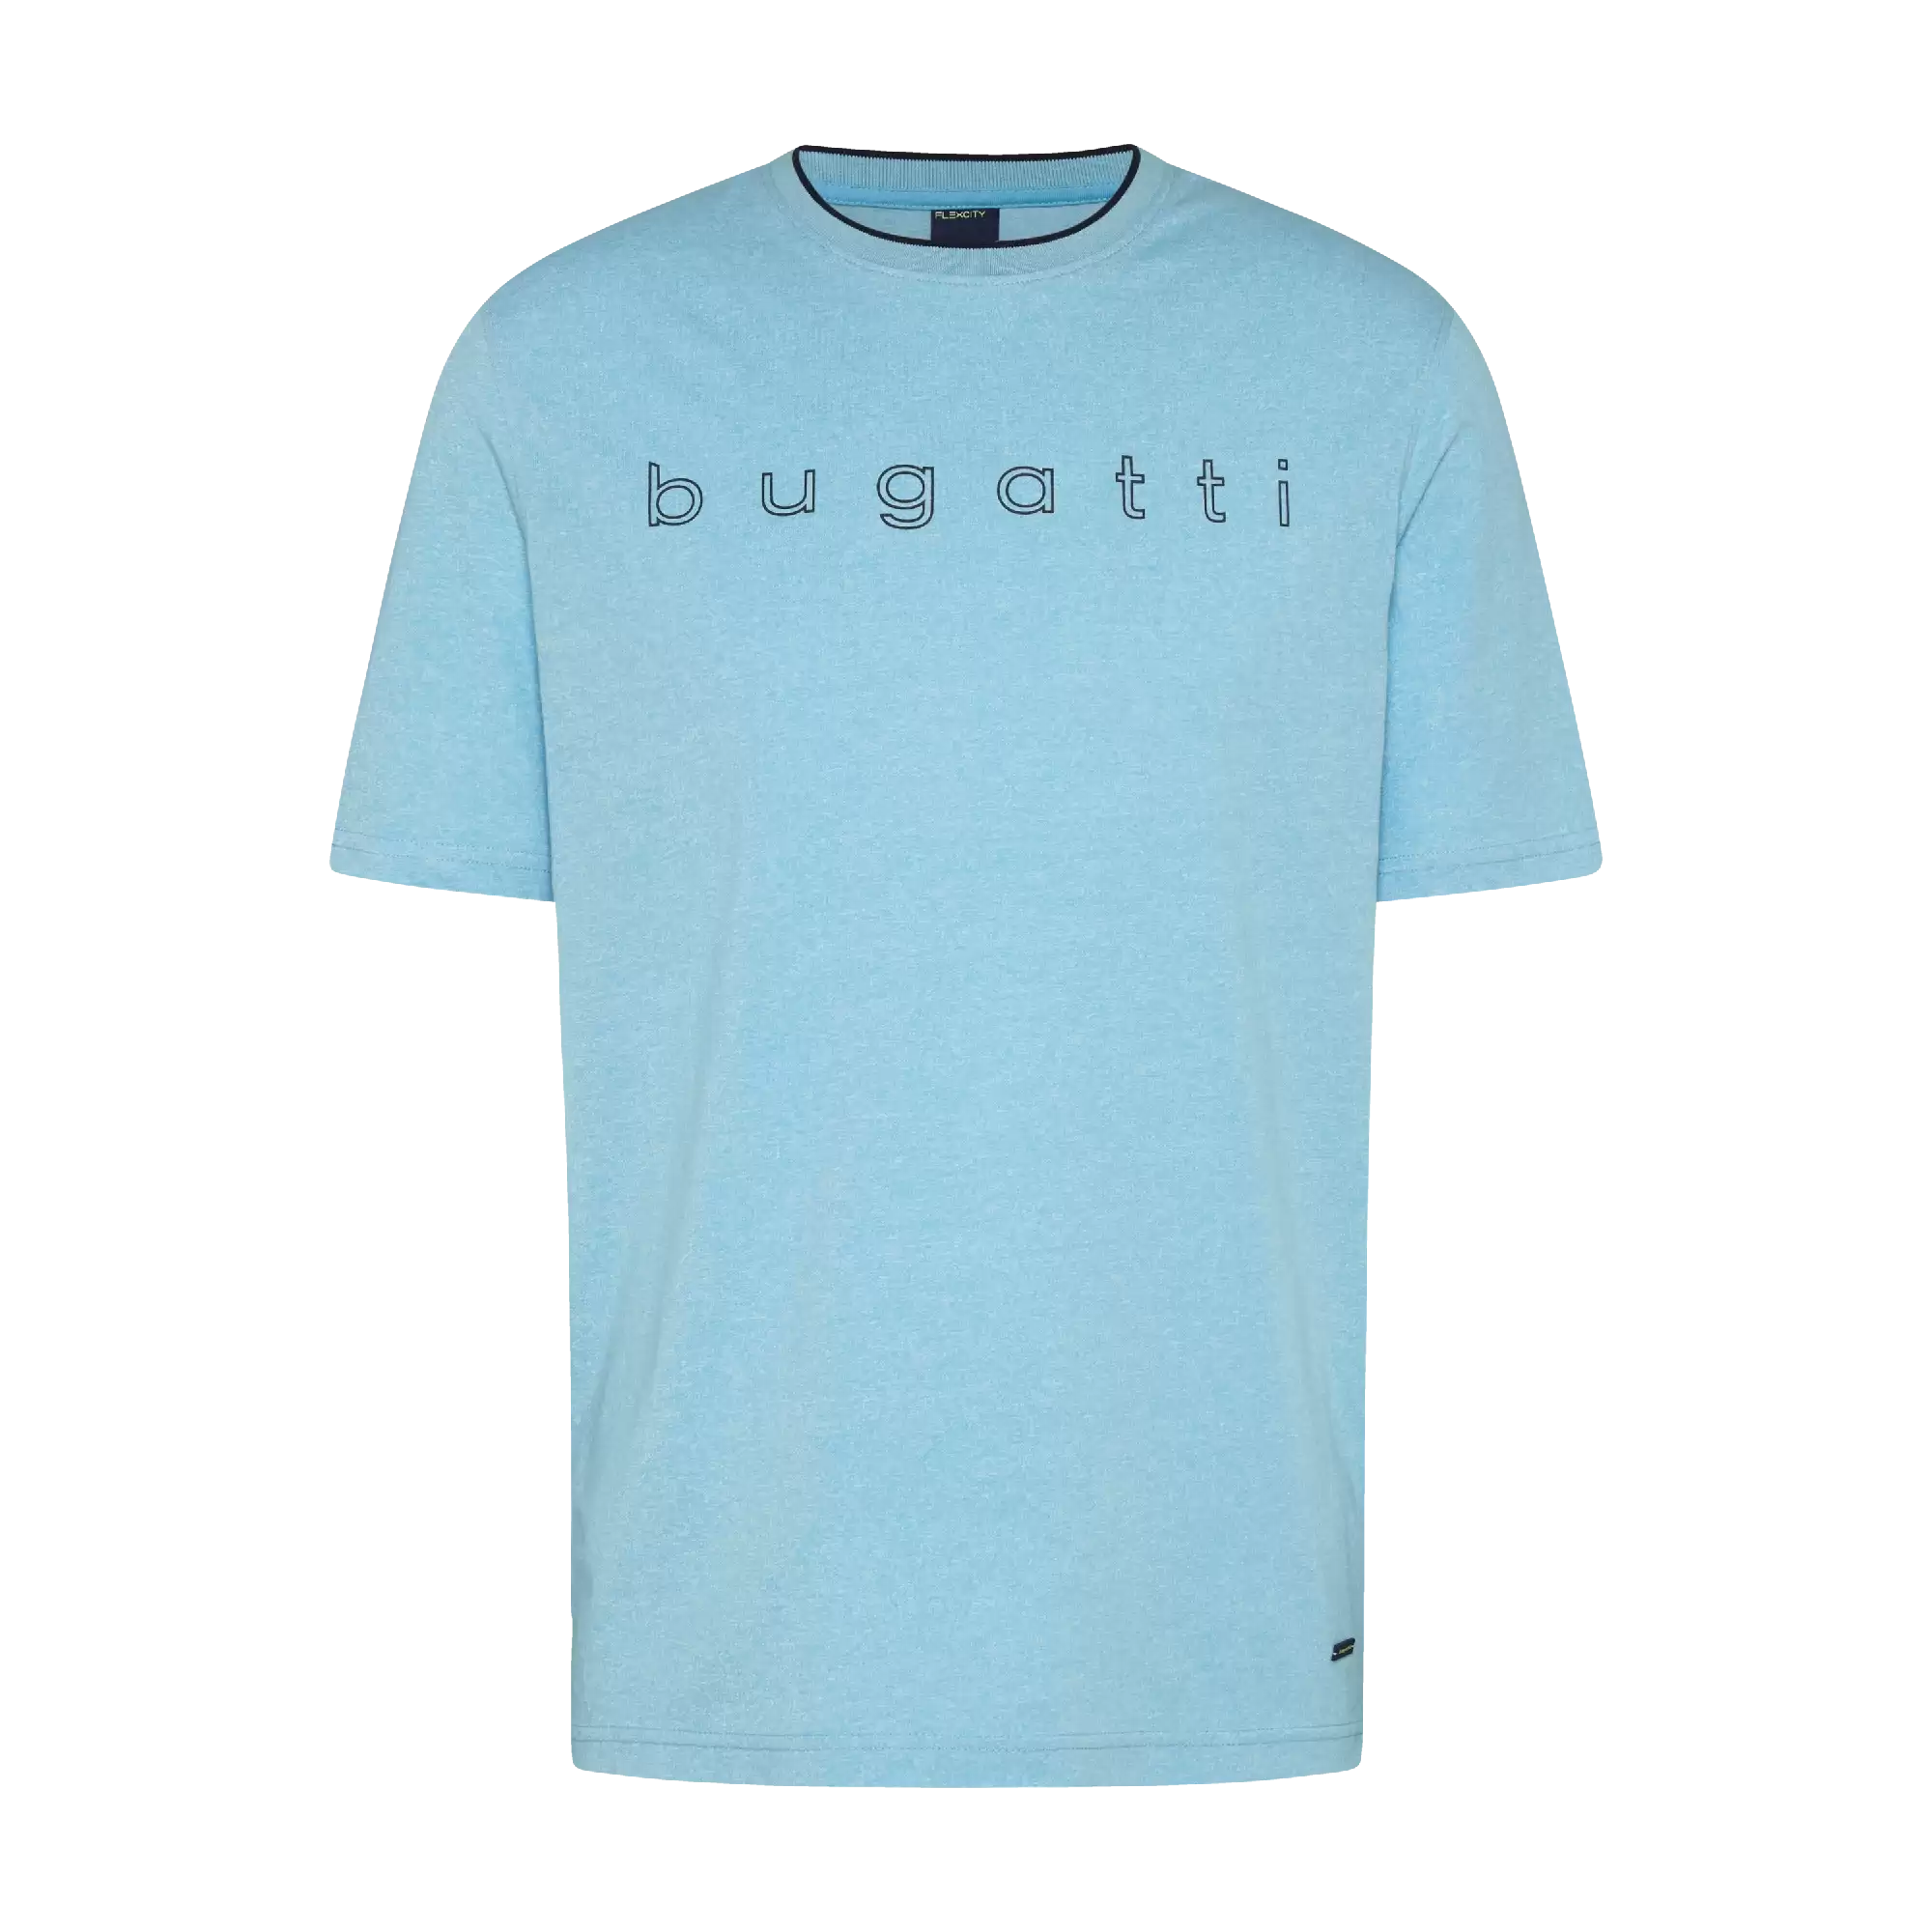 großem Logo-Print blau in | bugatti bugatti mit T-Shirt